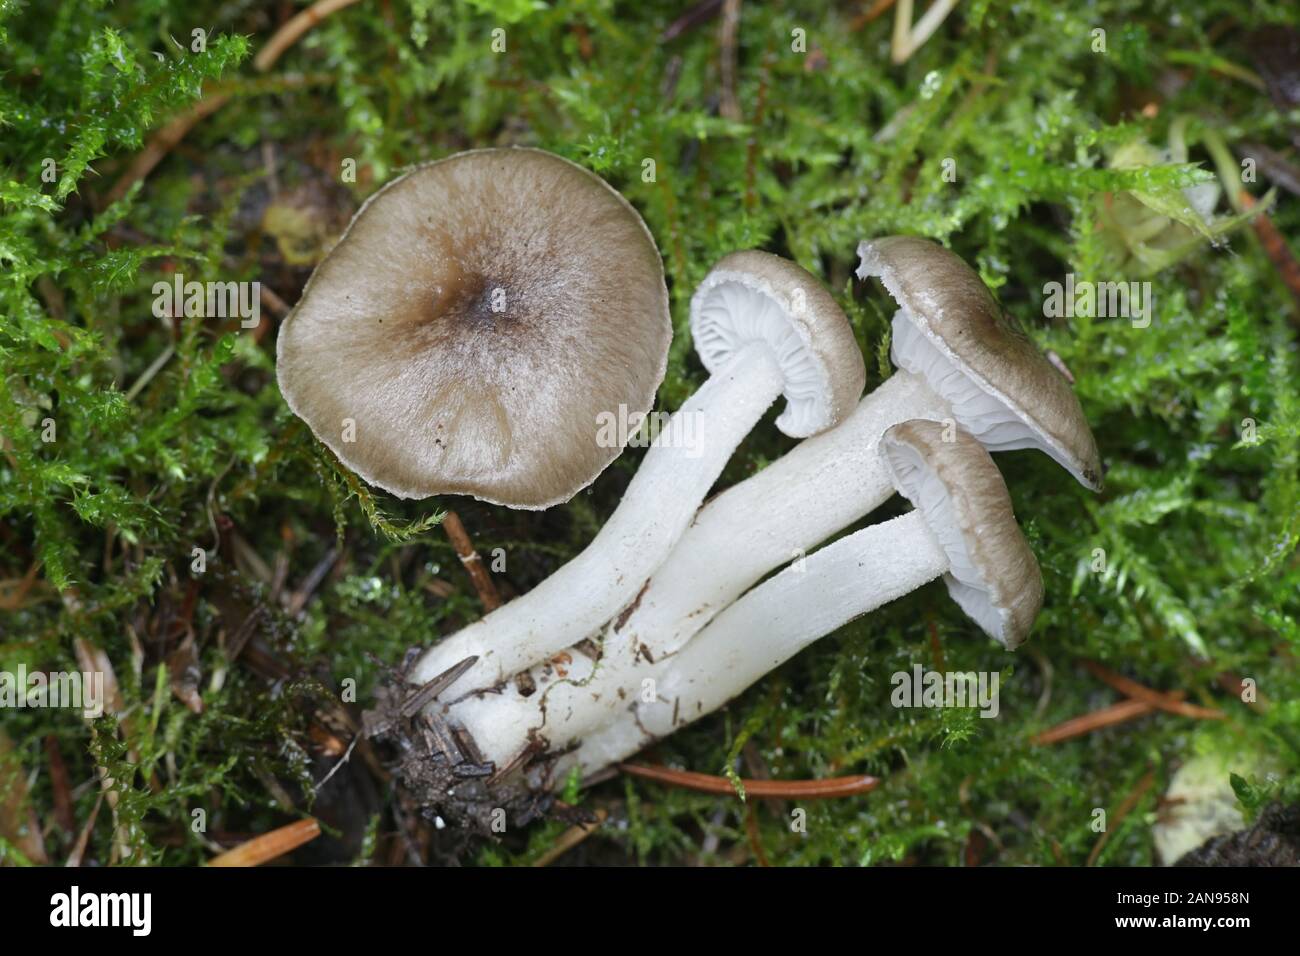 Hygrophorus pustulatus, a grey woodwax mushroom from Finland Stock Photo